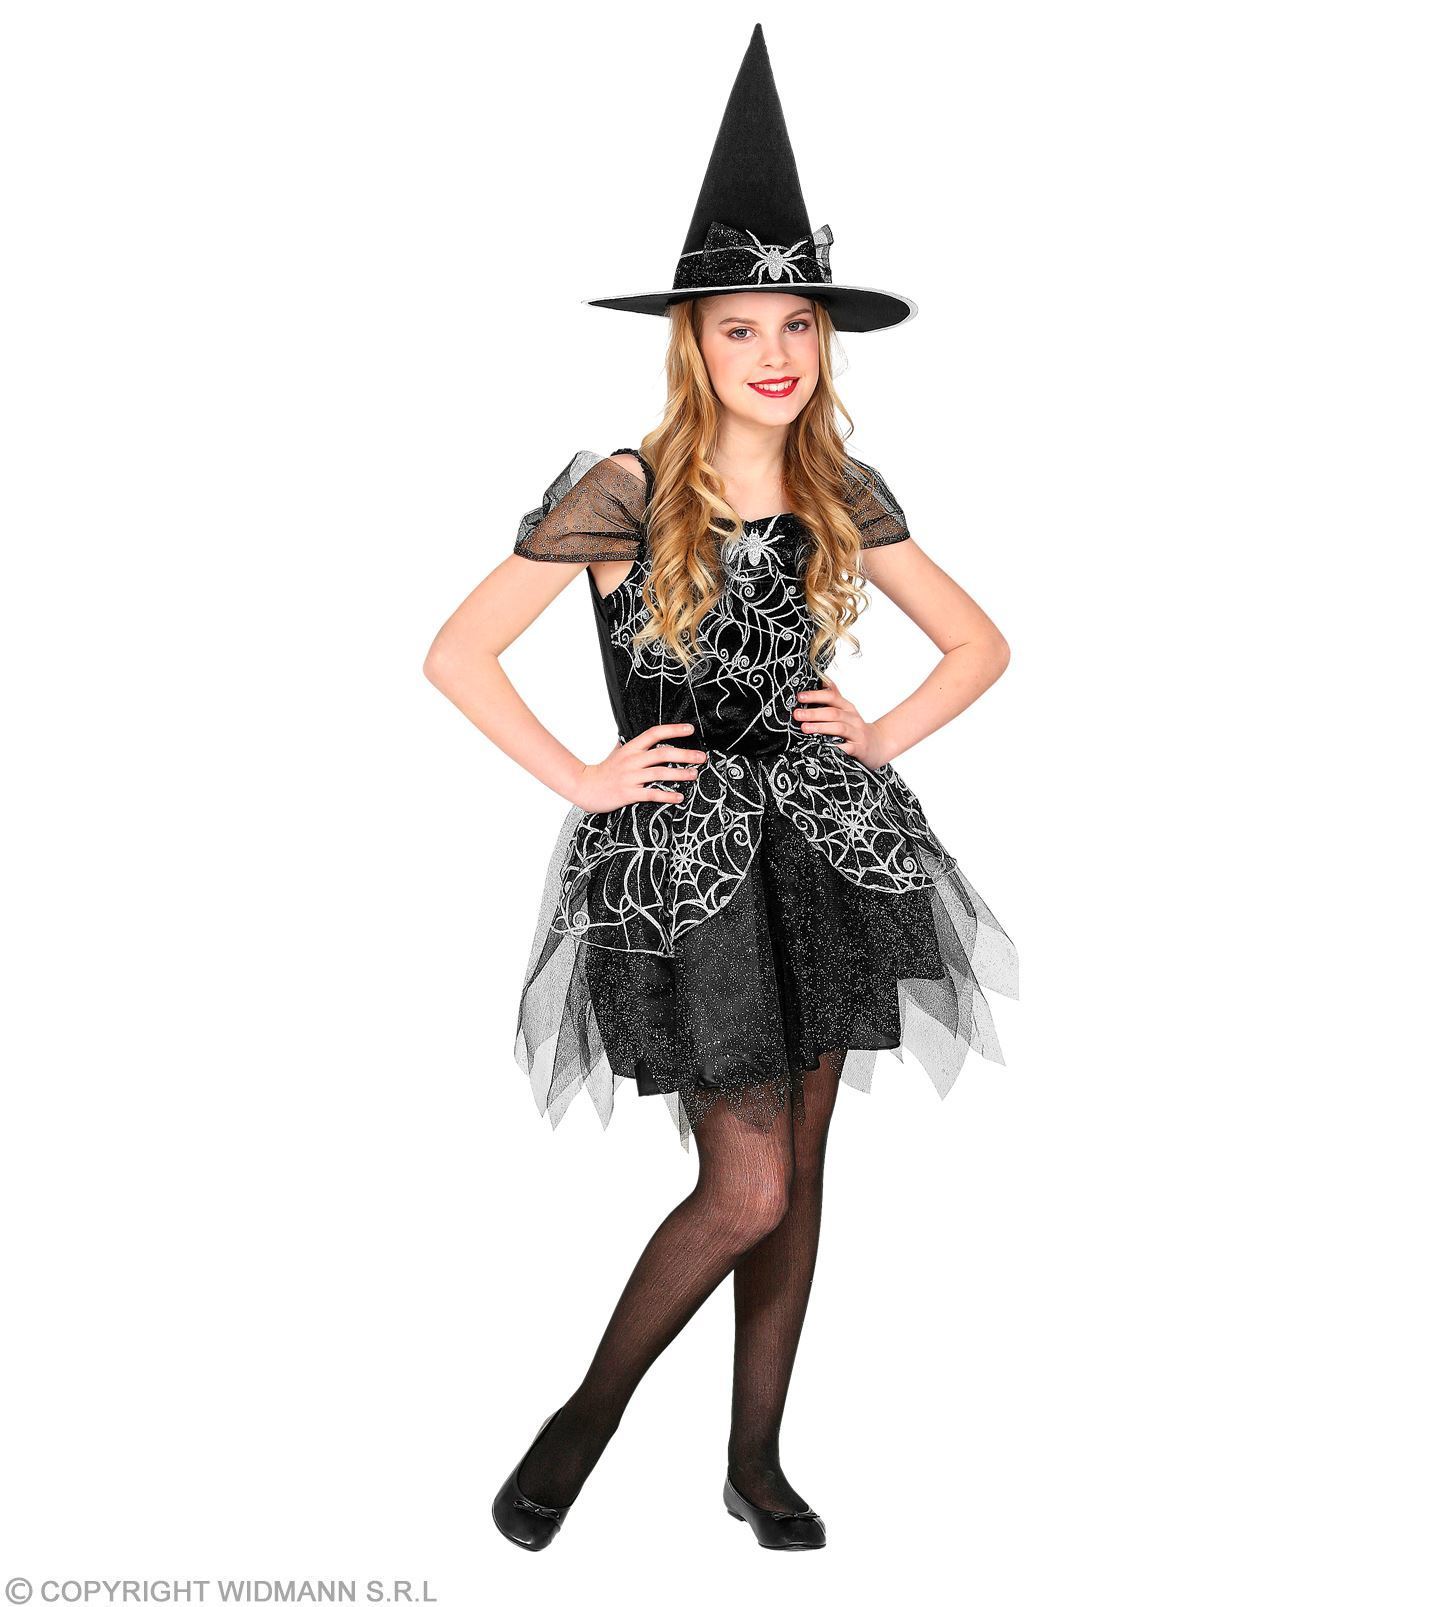 Heksen jurkje met hoed voor meisje kostuum spinnenweb Halloween